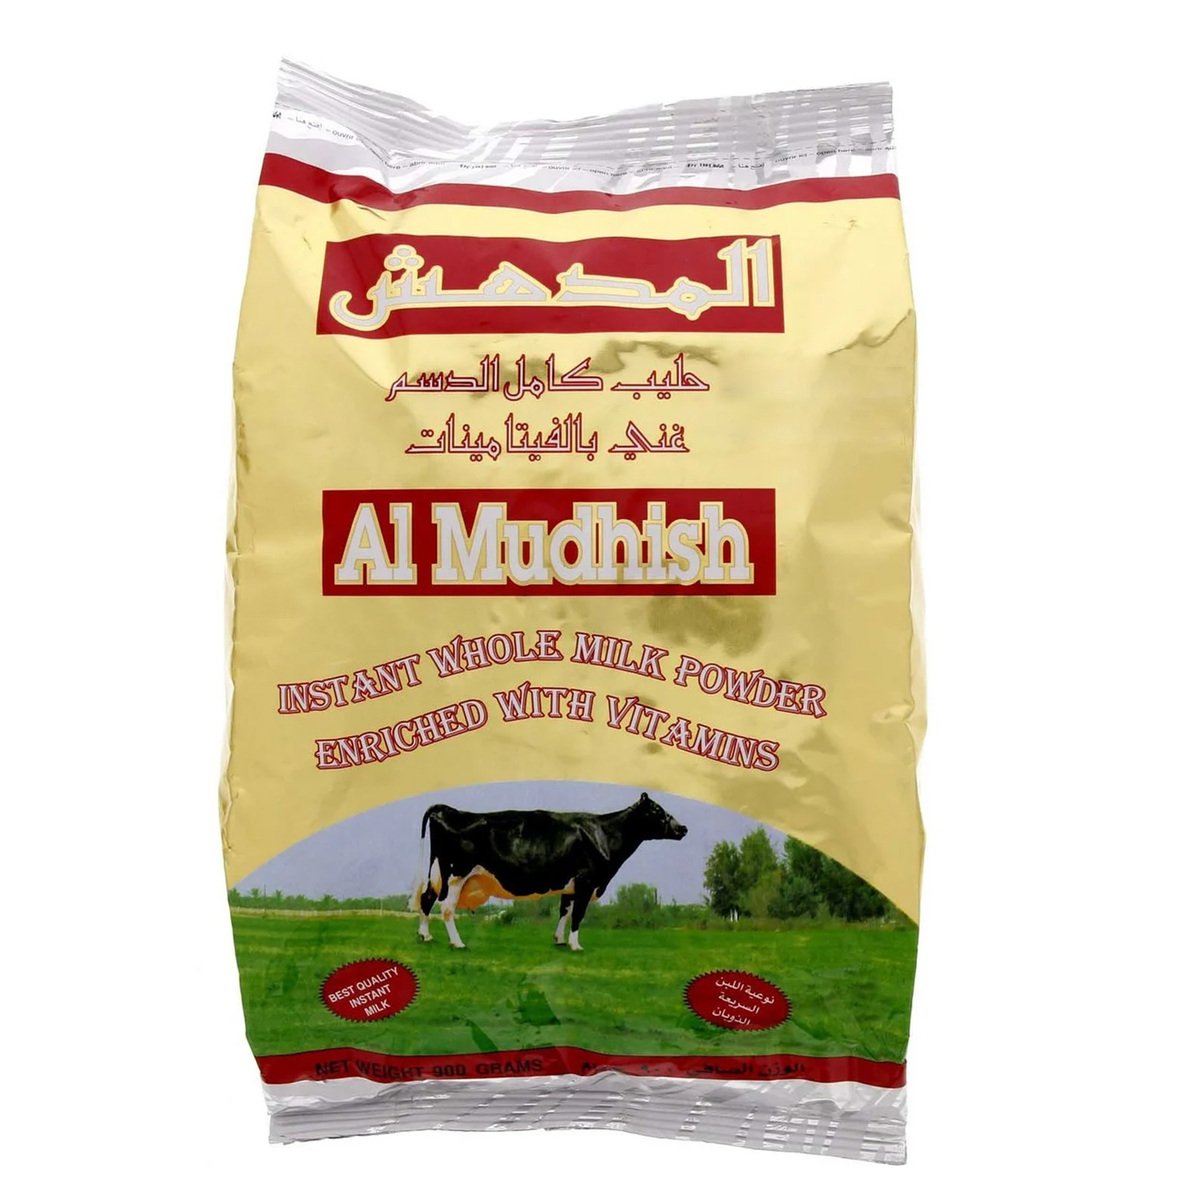 Al Mudhish Instant Whole Milk Powder 900 g